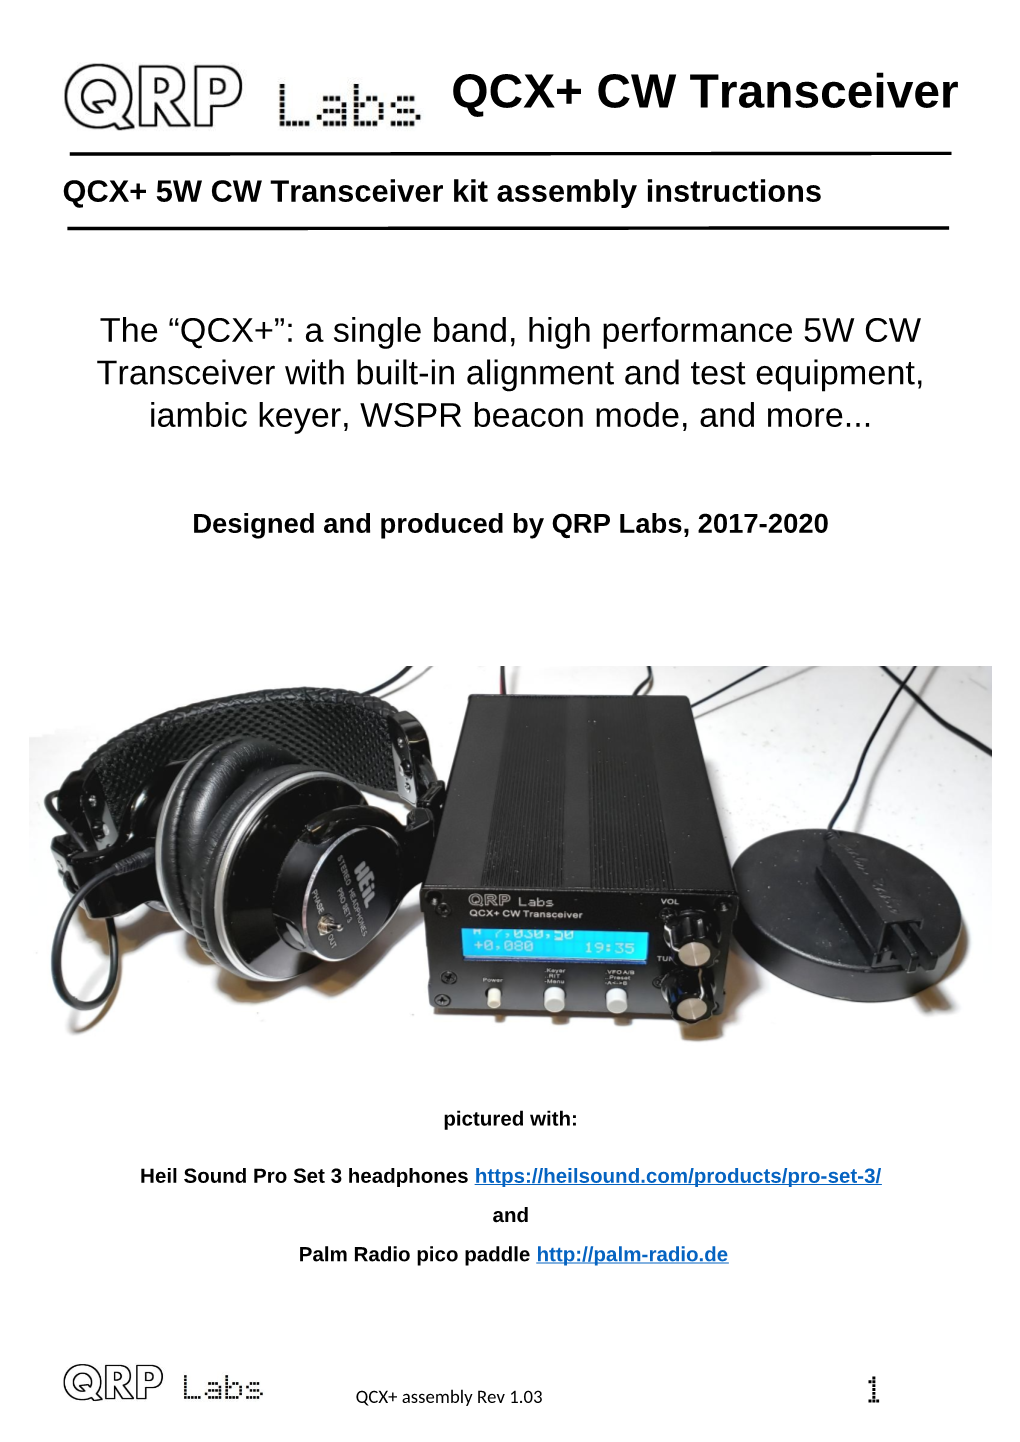 QCX+ CW Transceiver